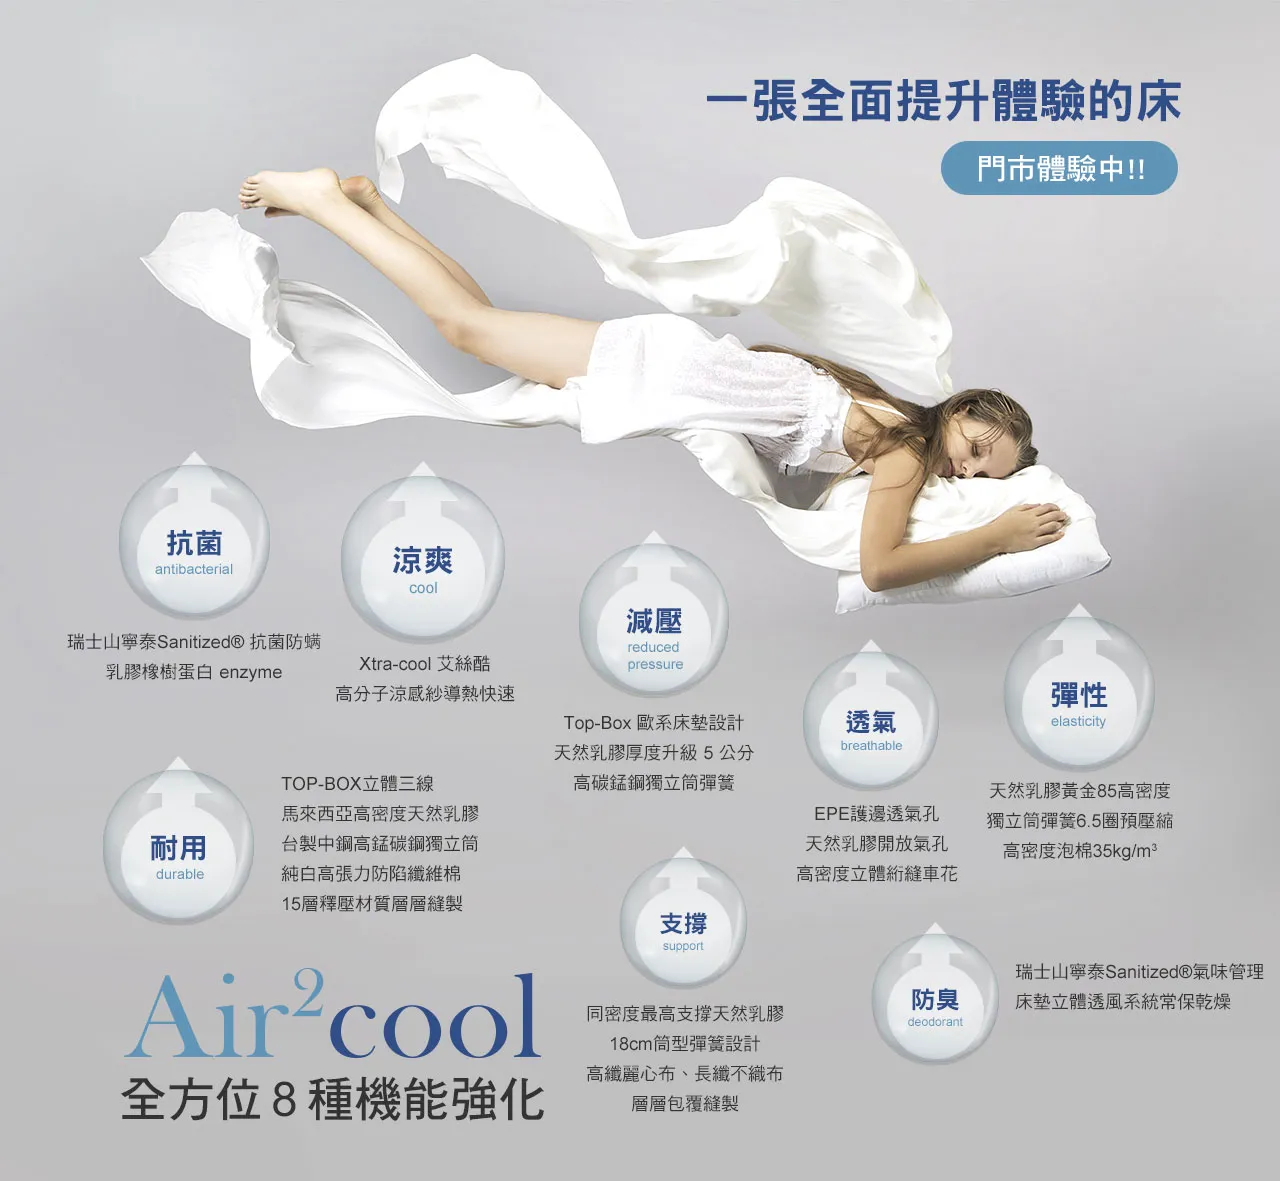 Bennis Air2Cool系列全方位 8 種強化床墊，一張全面提升體驗的床，門市開放體驗中!!